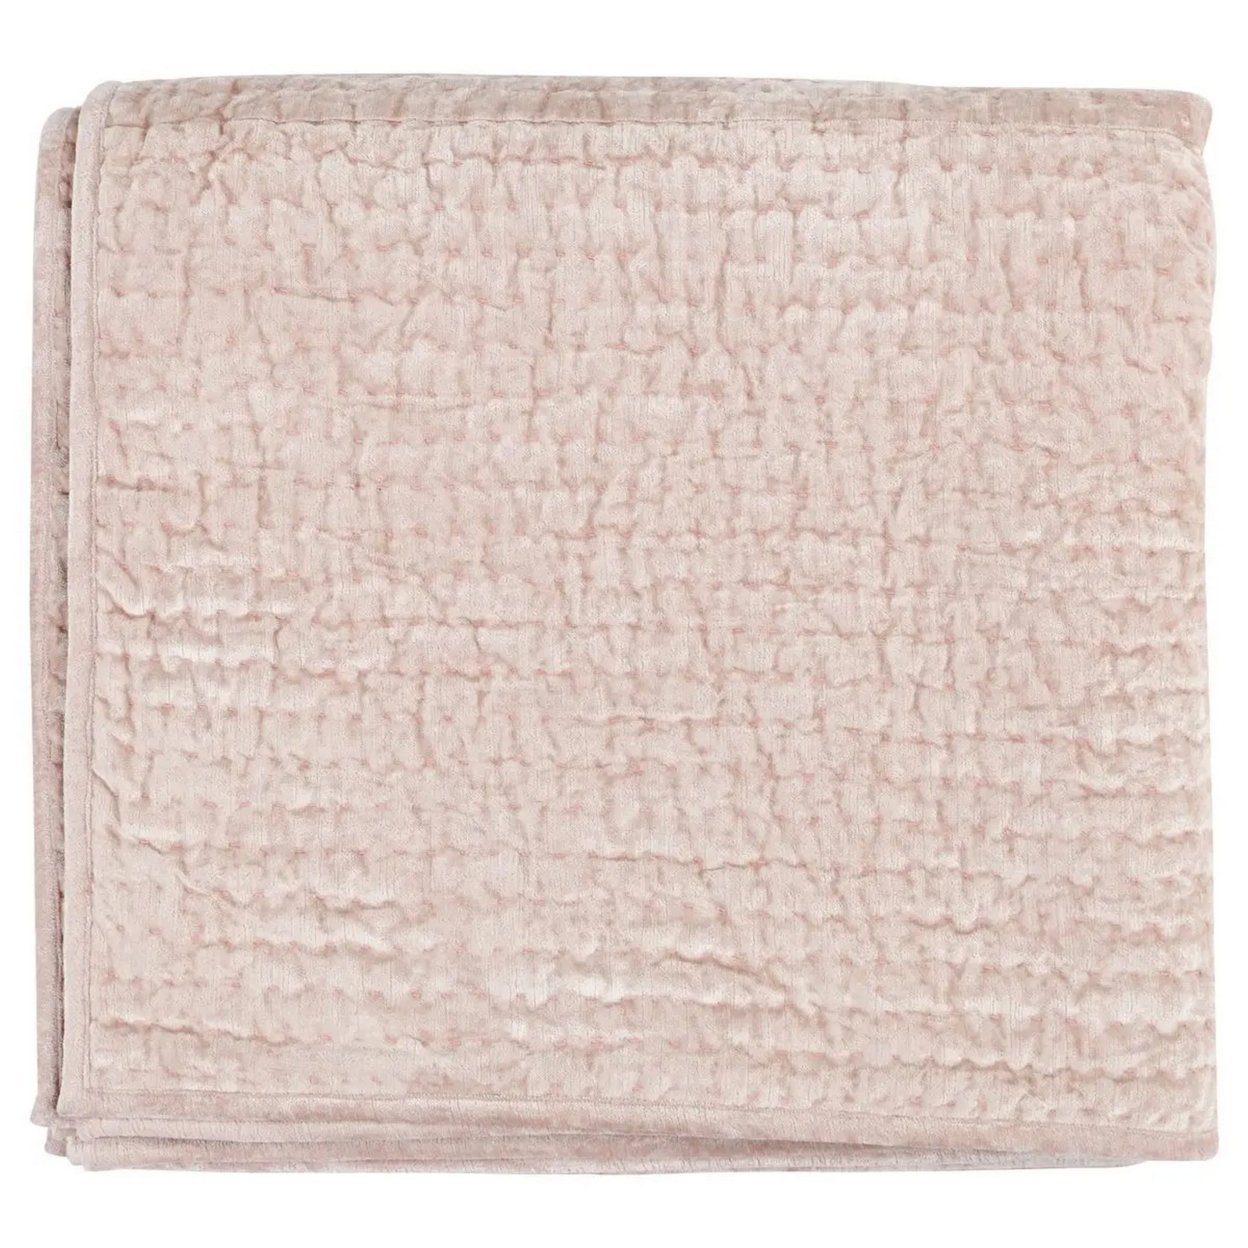 Lipa 96 X 108 Classic Handmade King Quilt With Polyfill And Cotton, Pink- Saltoro Sherpi